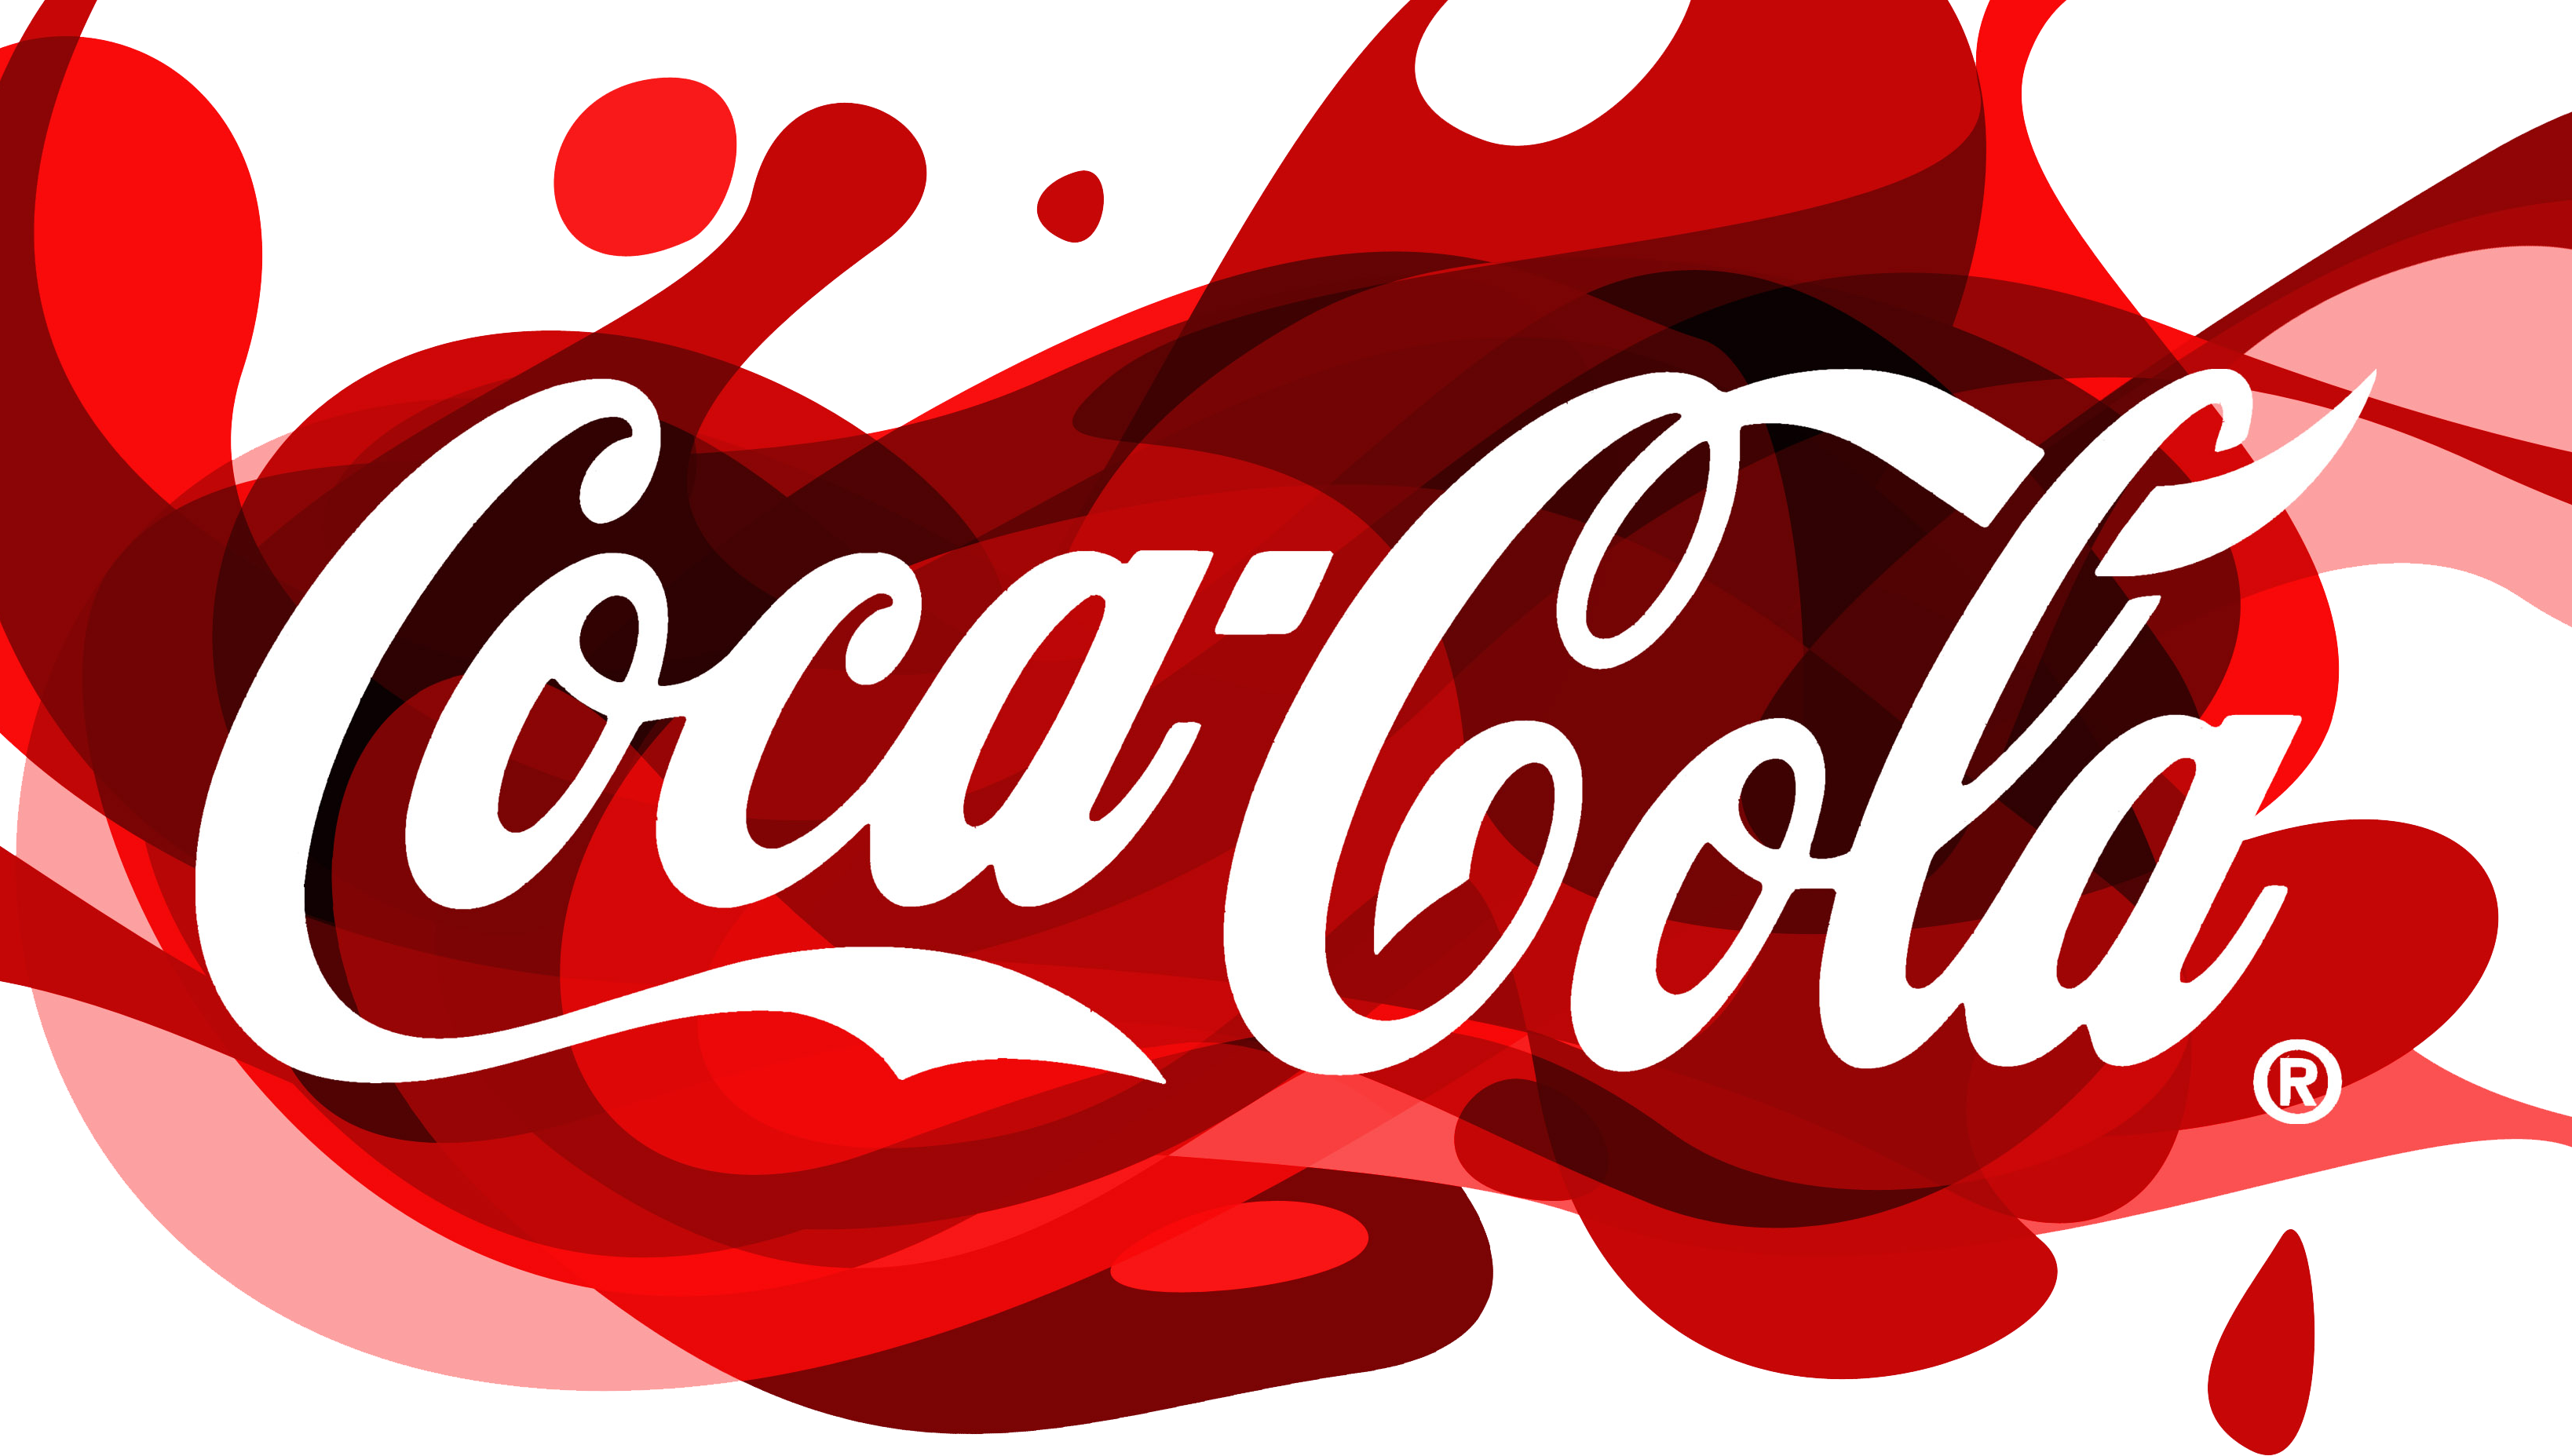 Coca Cola Logo Red